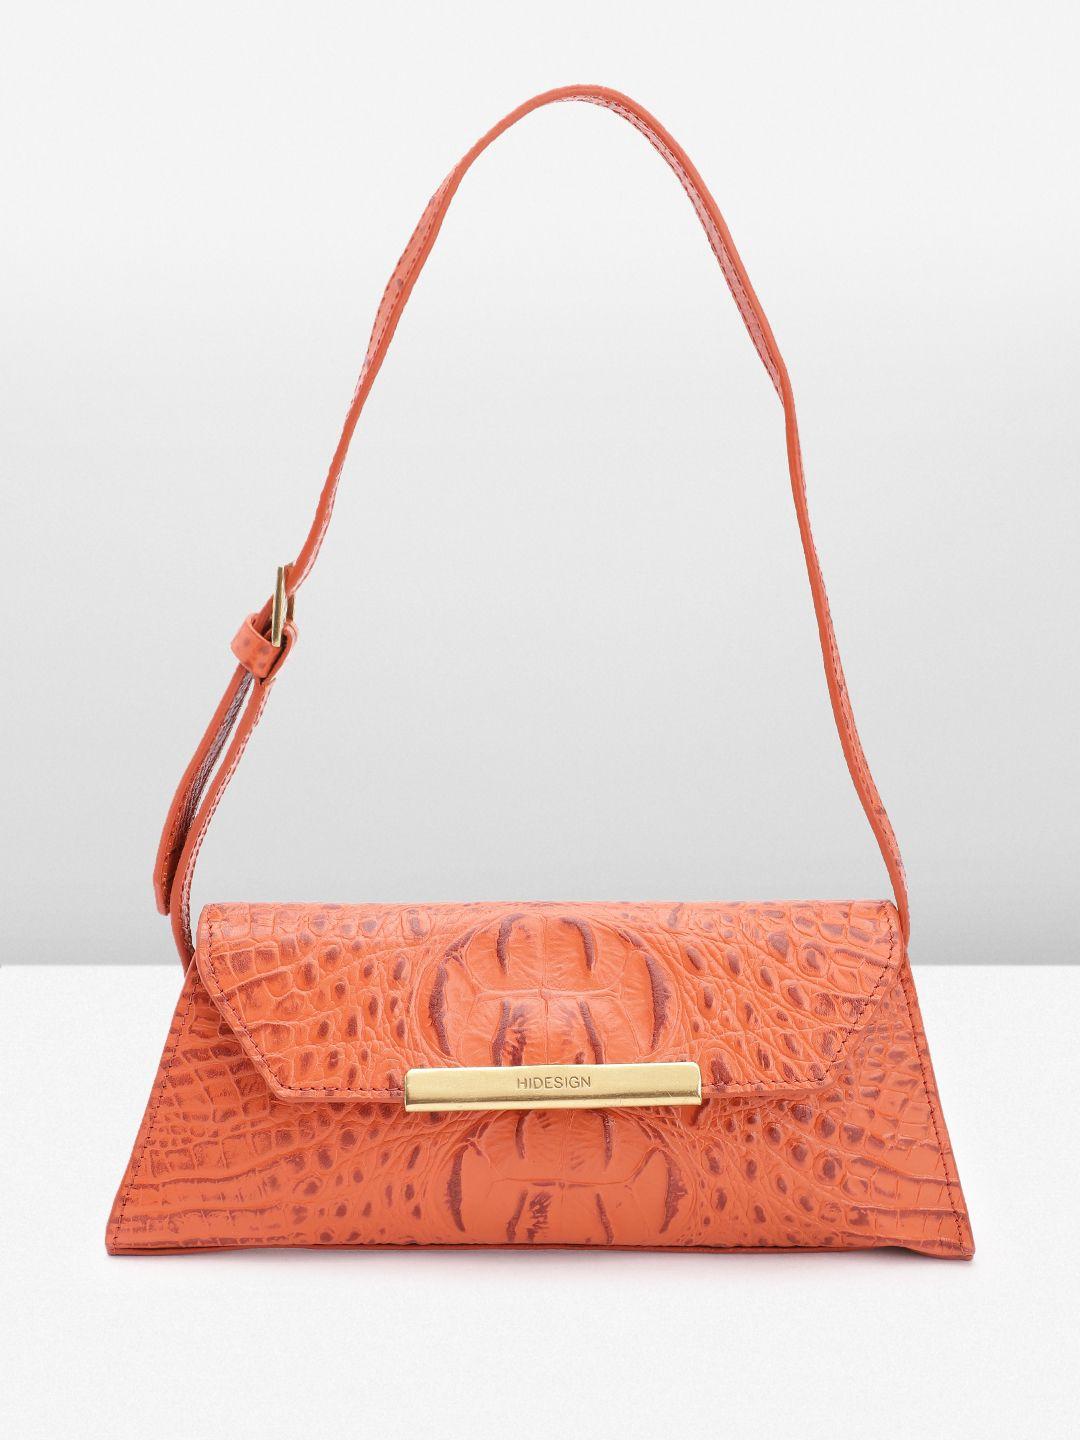 hidesign croc textured leather structured baguette bag